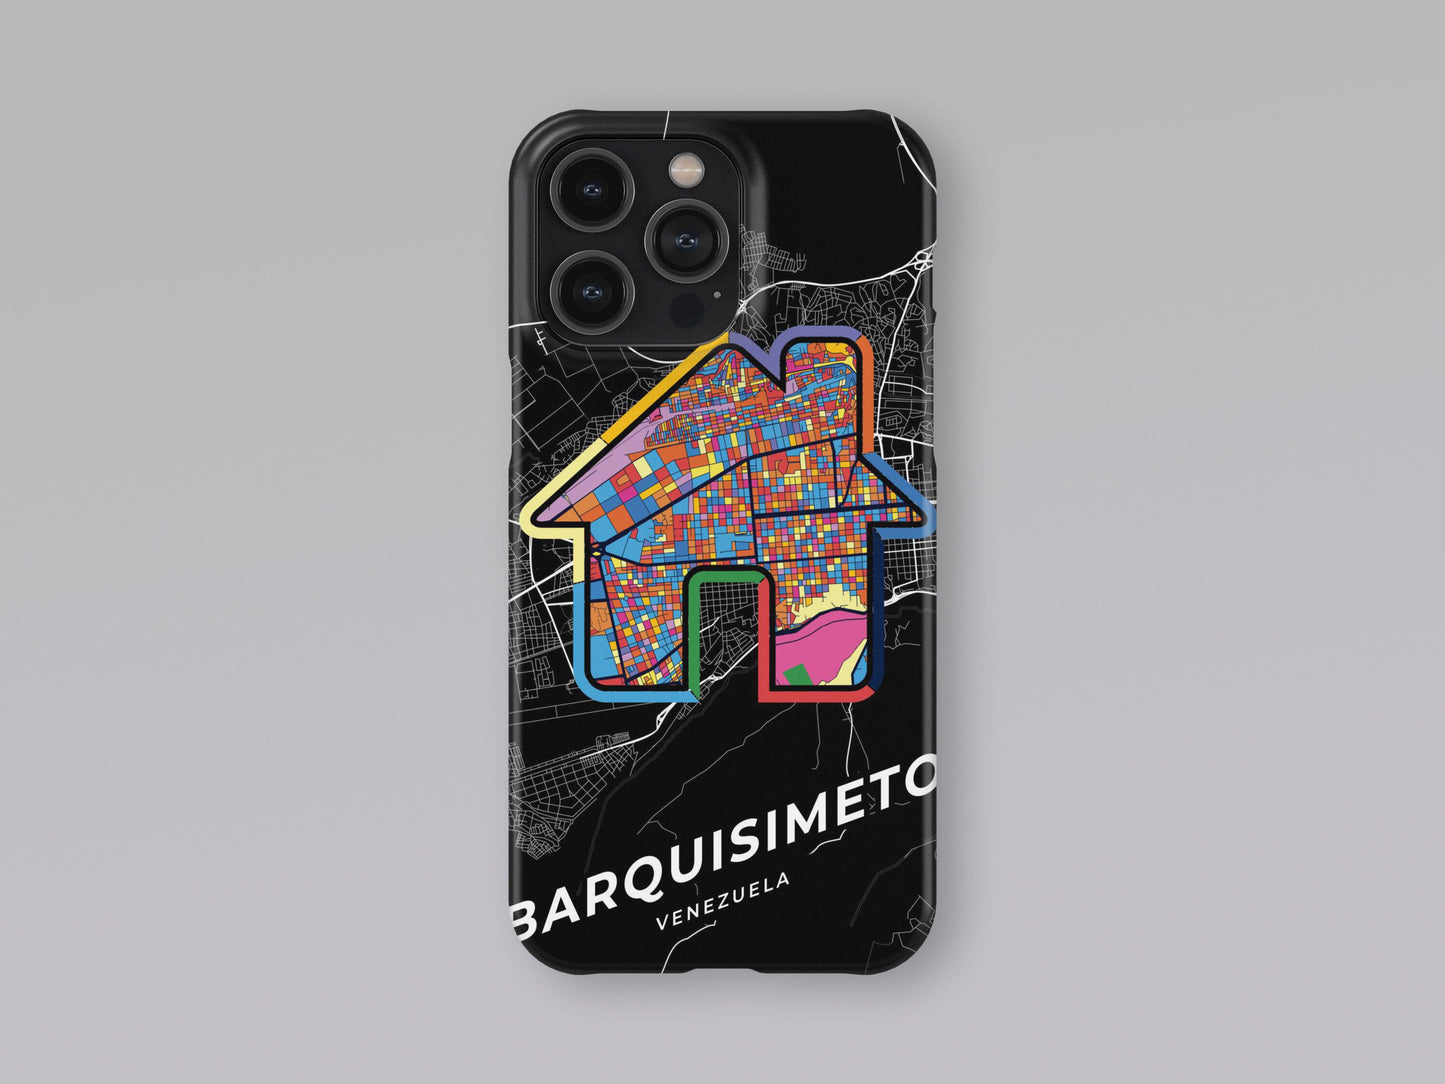 Barquisimeto Venezuela slim phone case with colorful icon. Birthday, wedding or housewarming gift. Couple match cases. 3